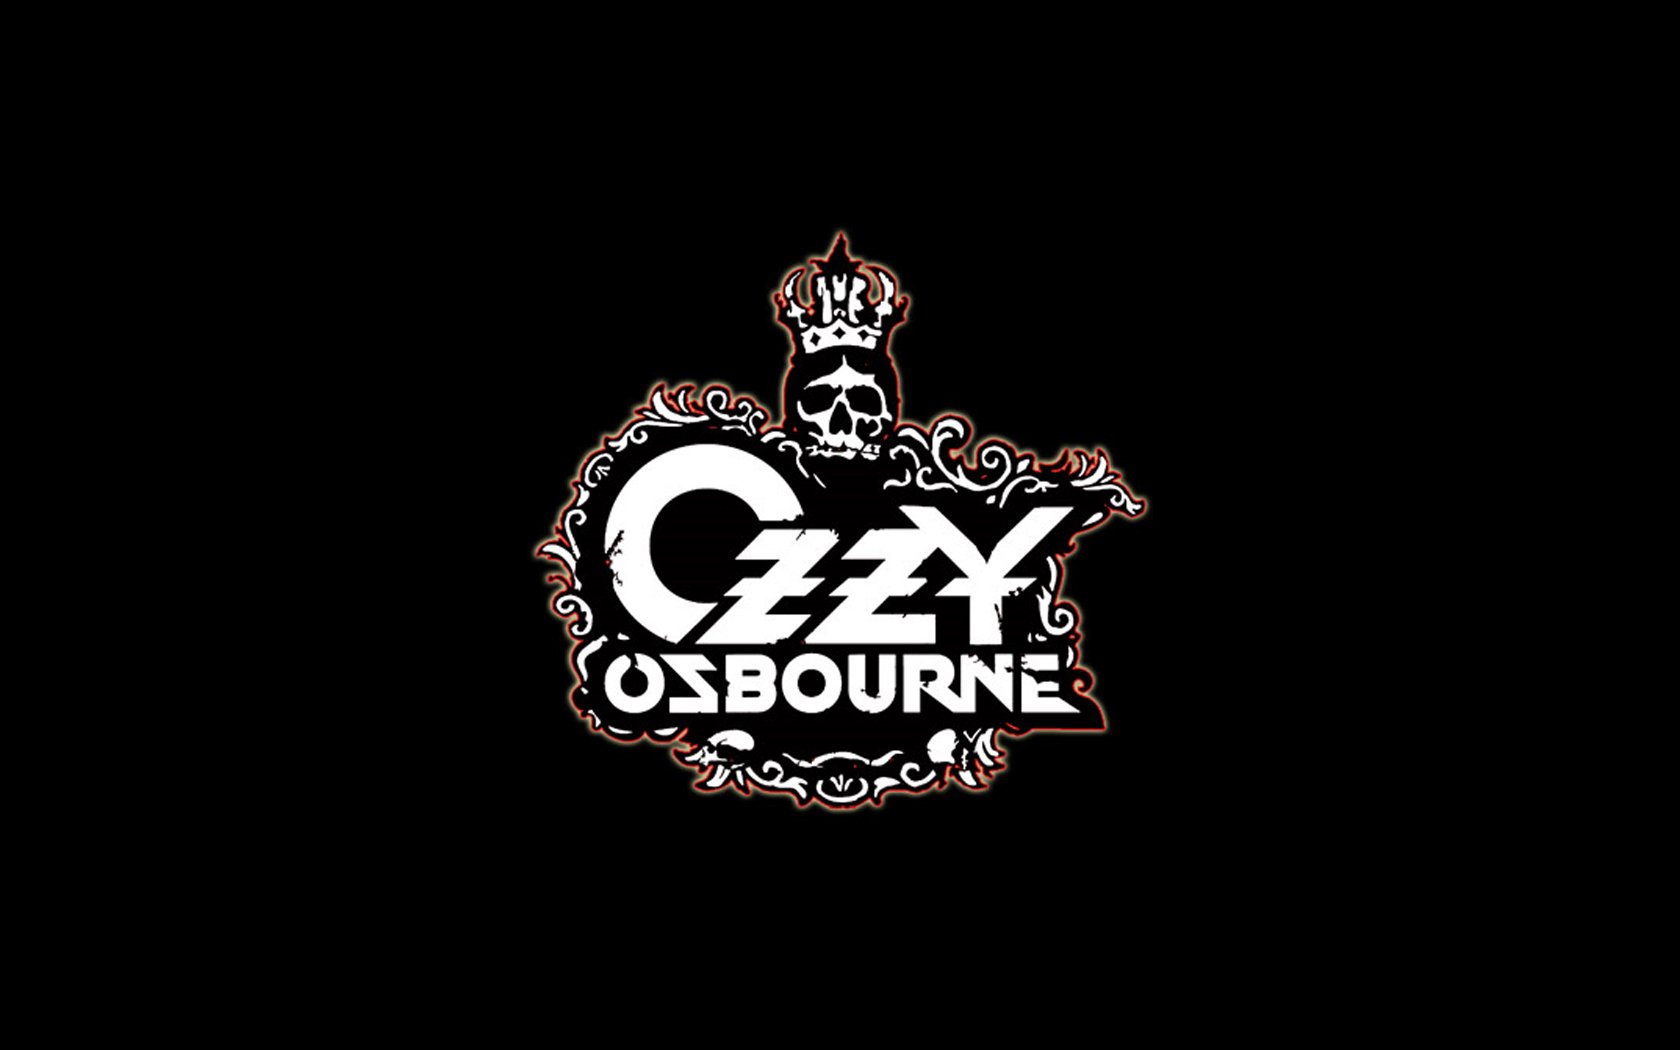 Ozzy Osbourne Wallpapers